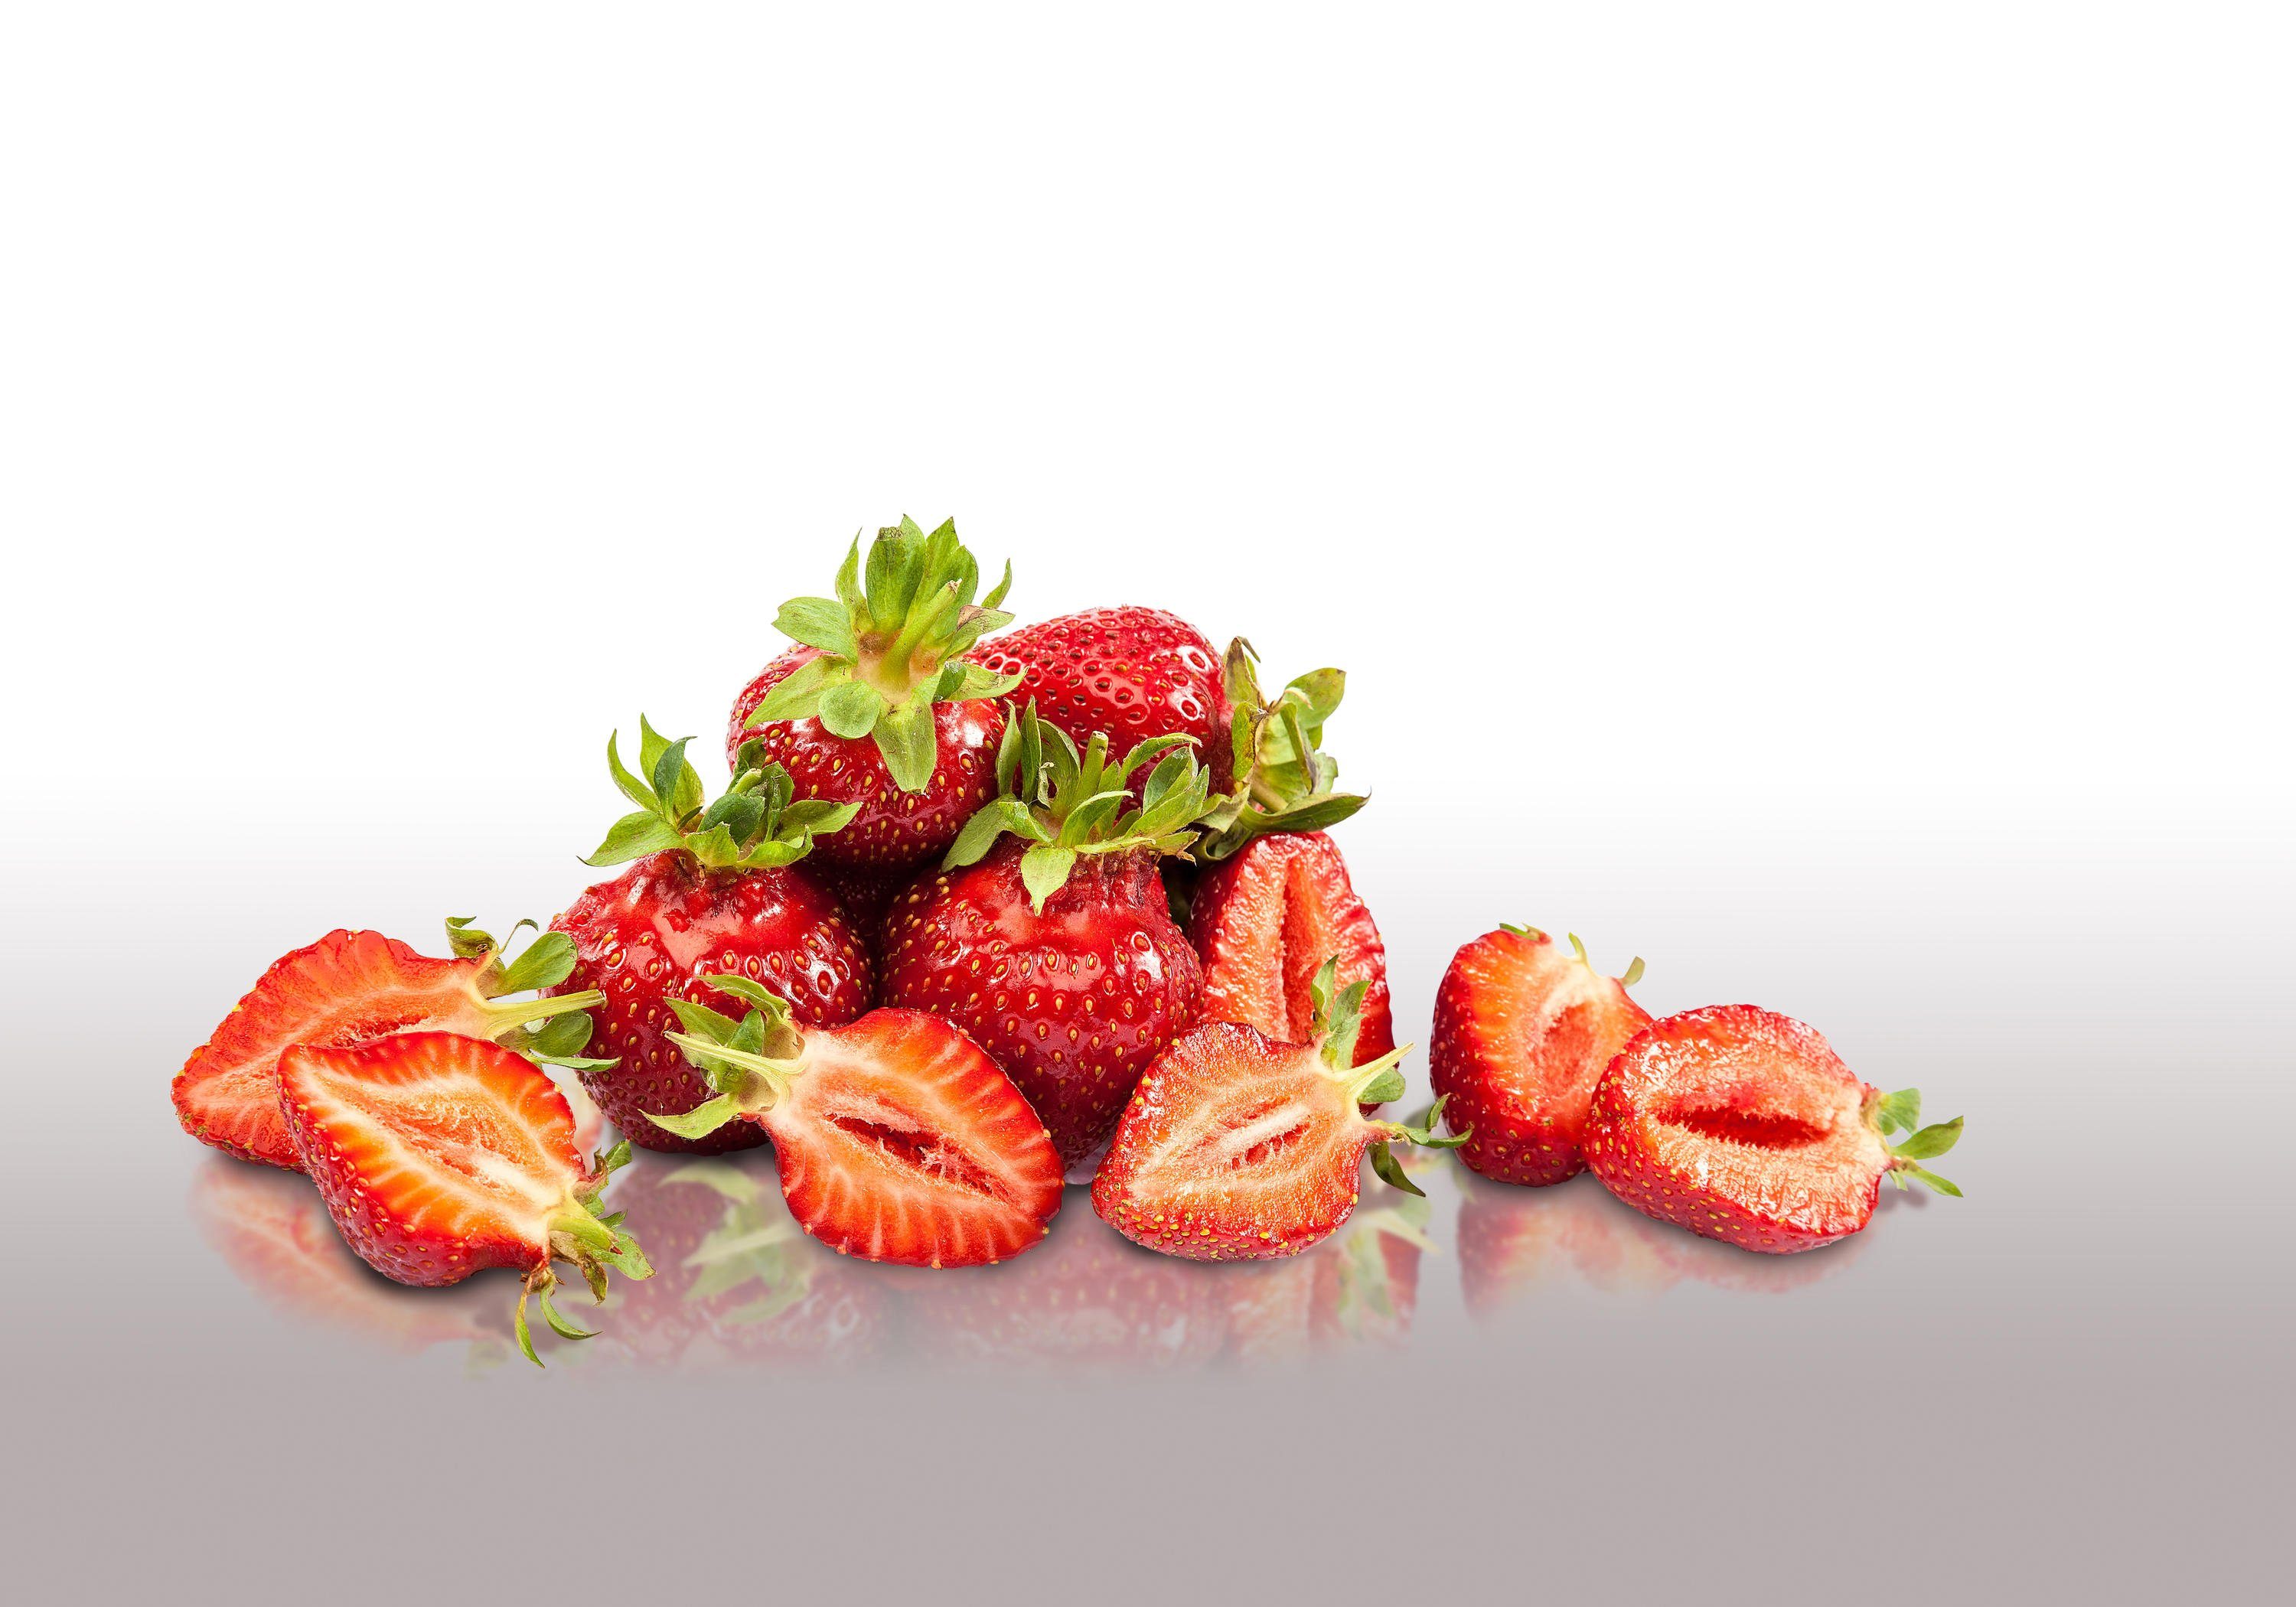 wandmotiv24 Fototapete Erdbeeren Spiegel Früchte, glatt, Wandtapete, Motivtapete, matt, Vliestapete